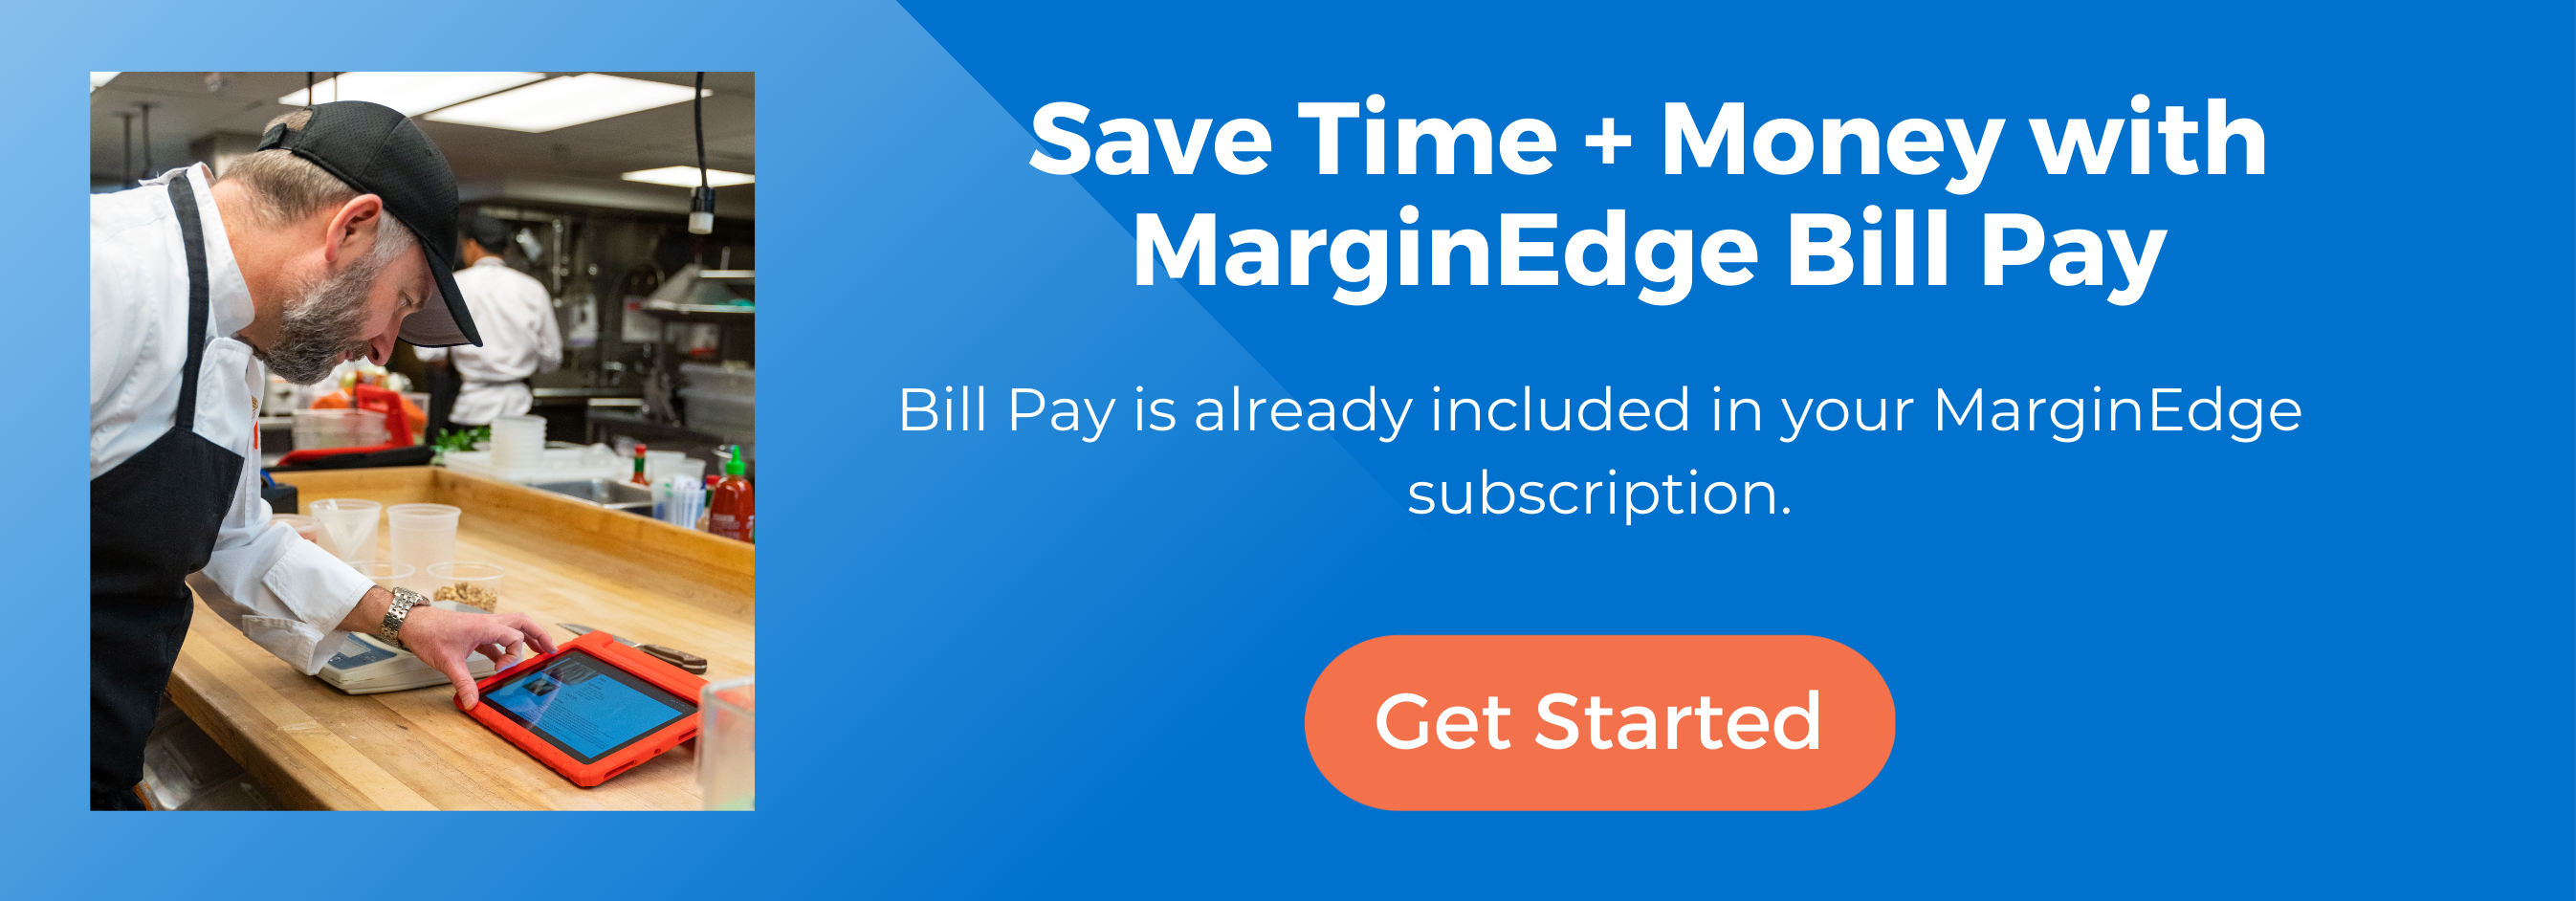 MarginEdge Bill Pay